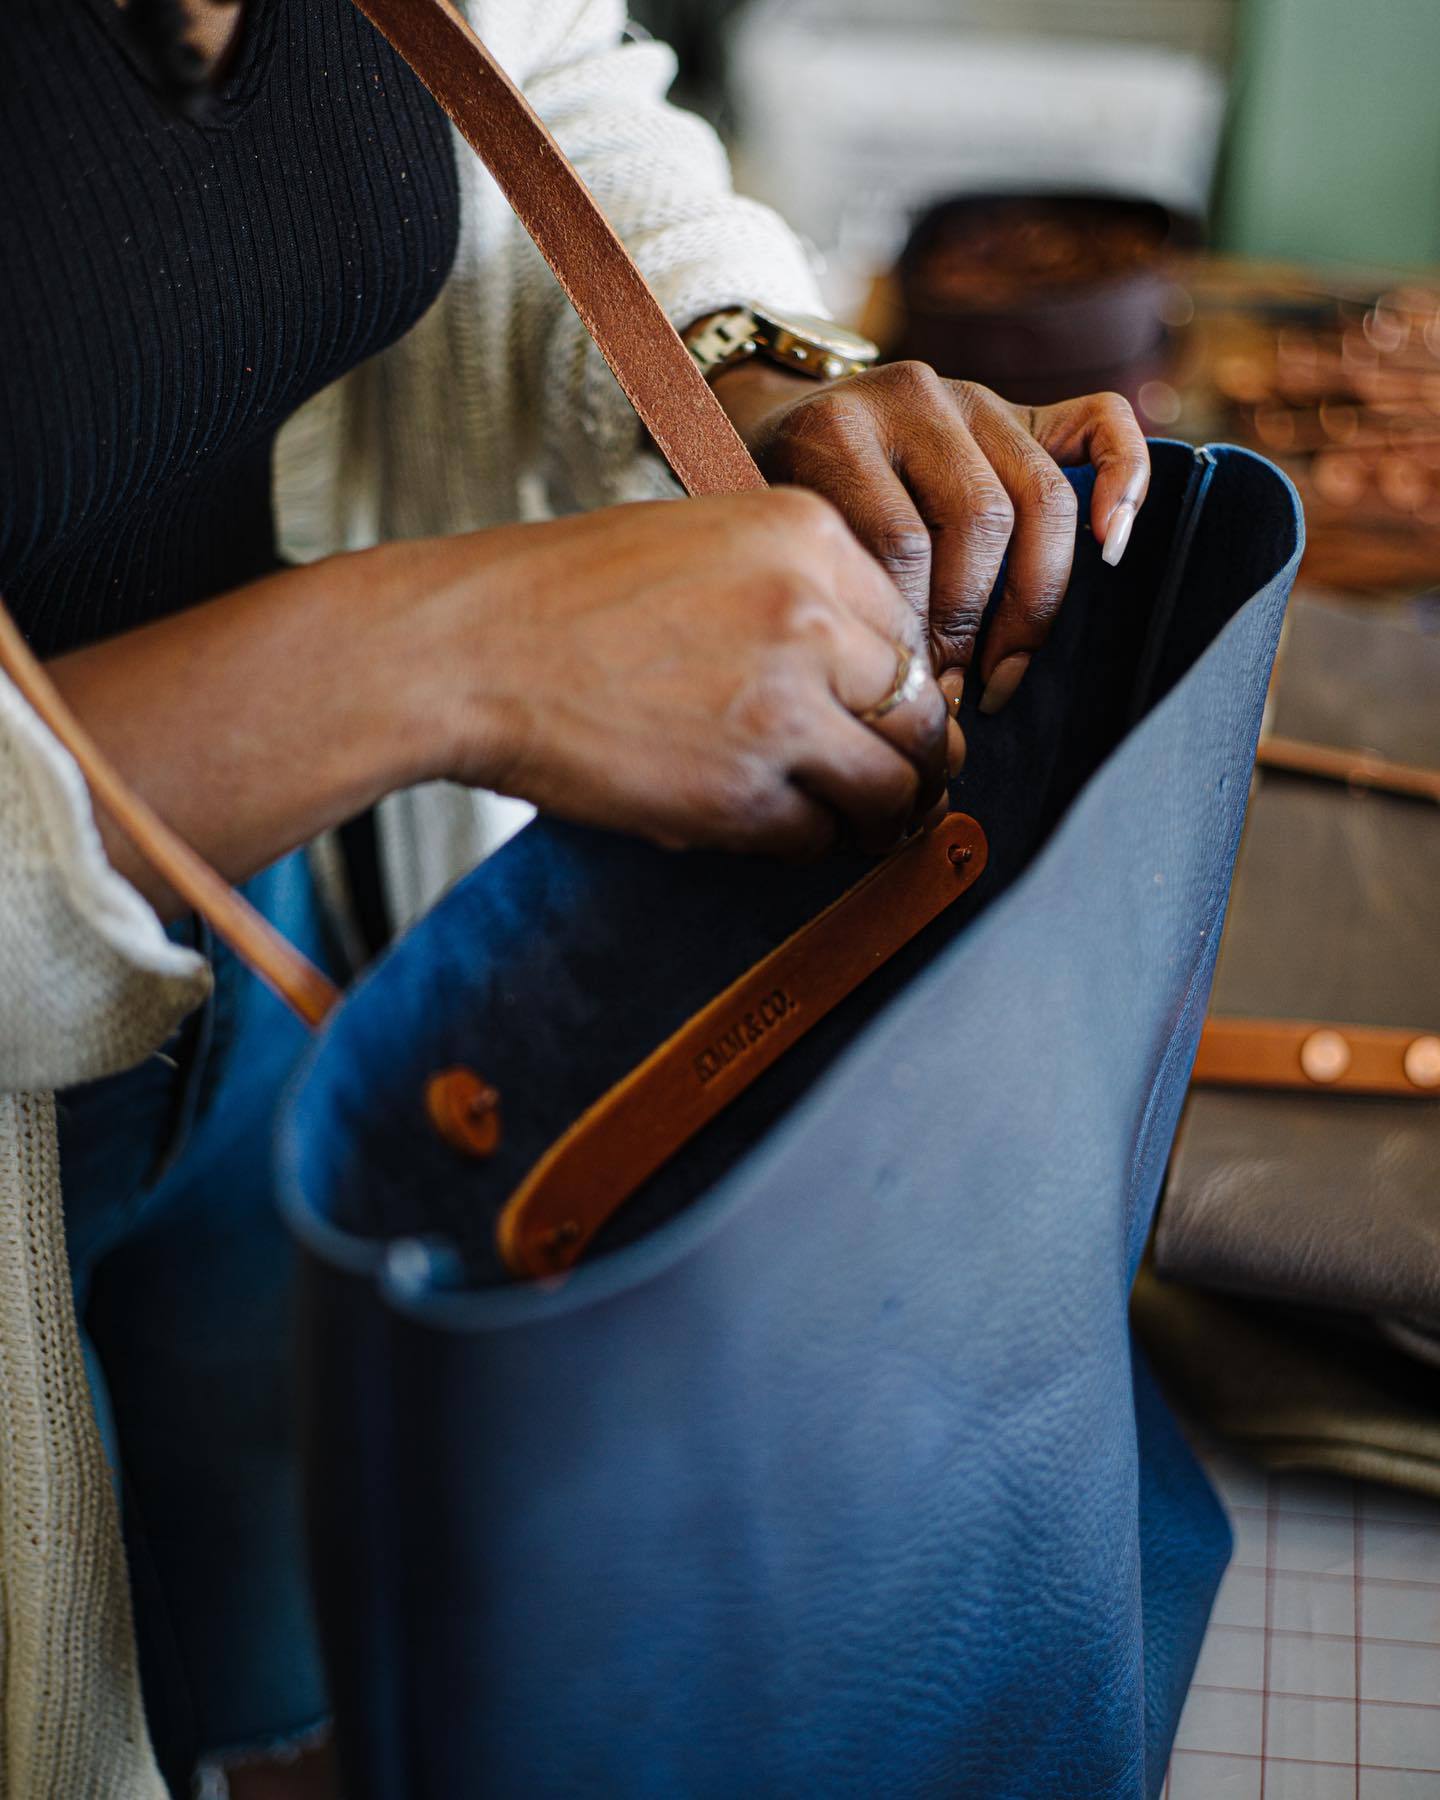 Leather Tote Bag: Black Kodiak Tote | Leather Handbags by KMM & Co. 10-Inch +$25 / Snap Closure (FINAL Sale) +$10